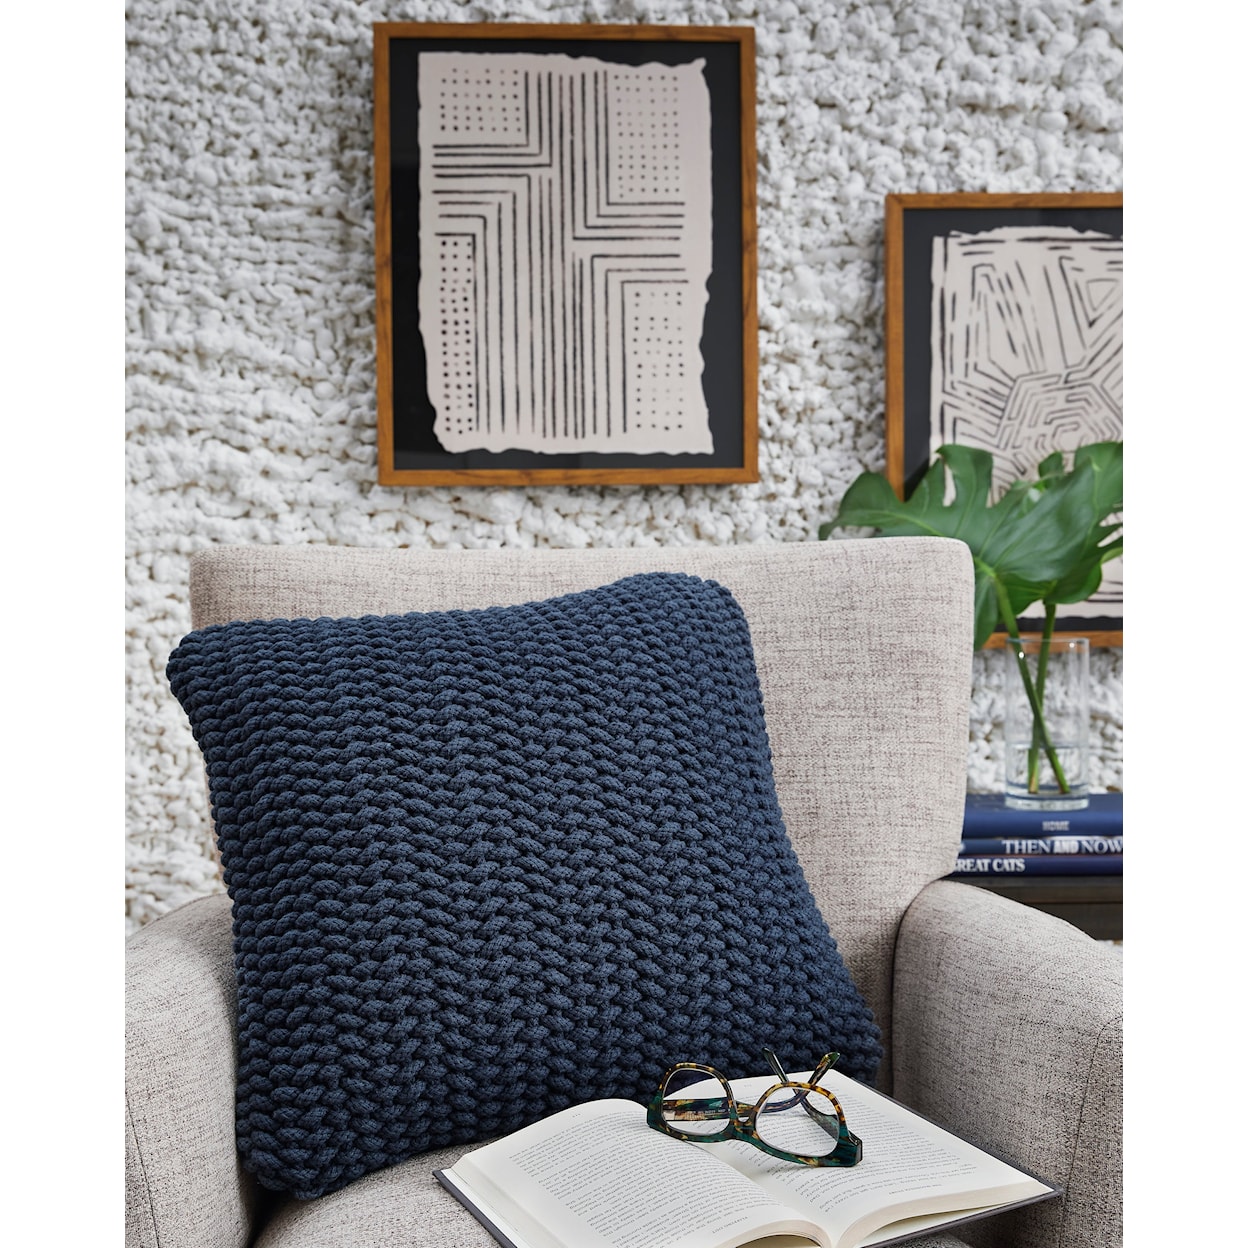 Ashley Furniture Signature Design Renemore Renemore Blue Pillow